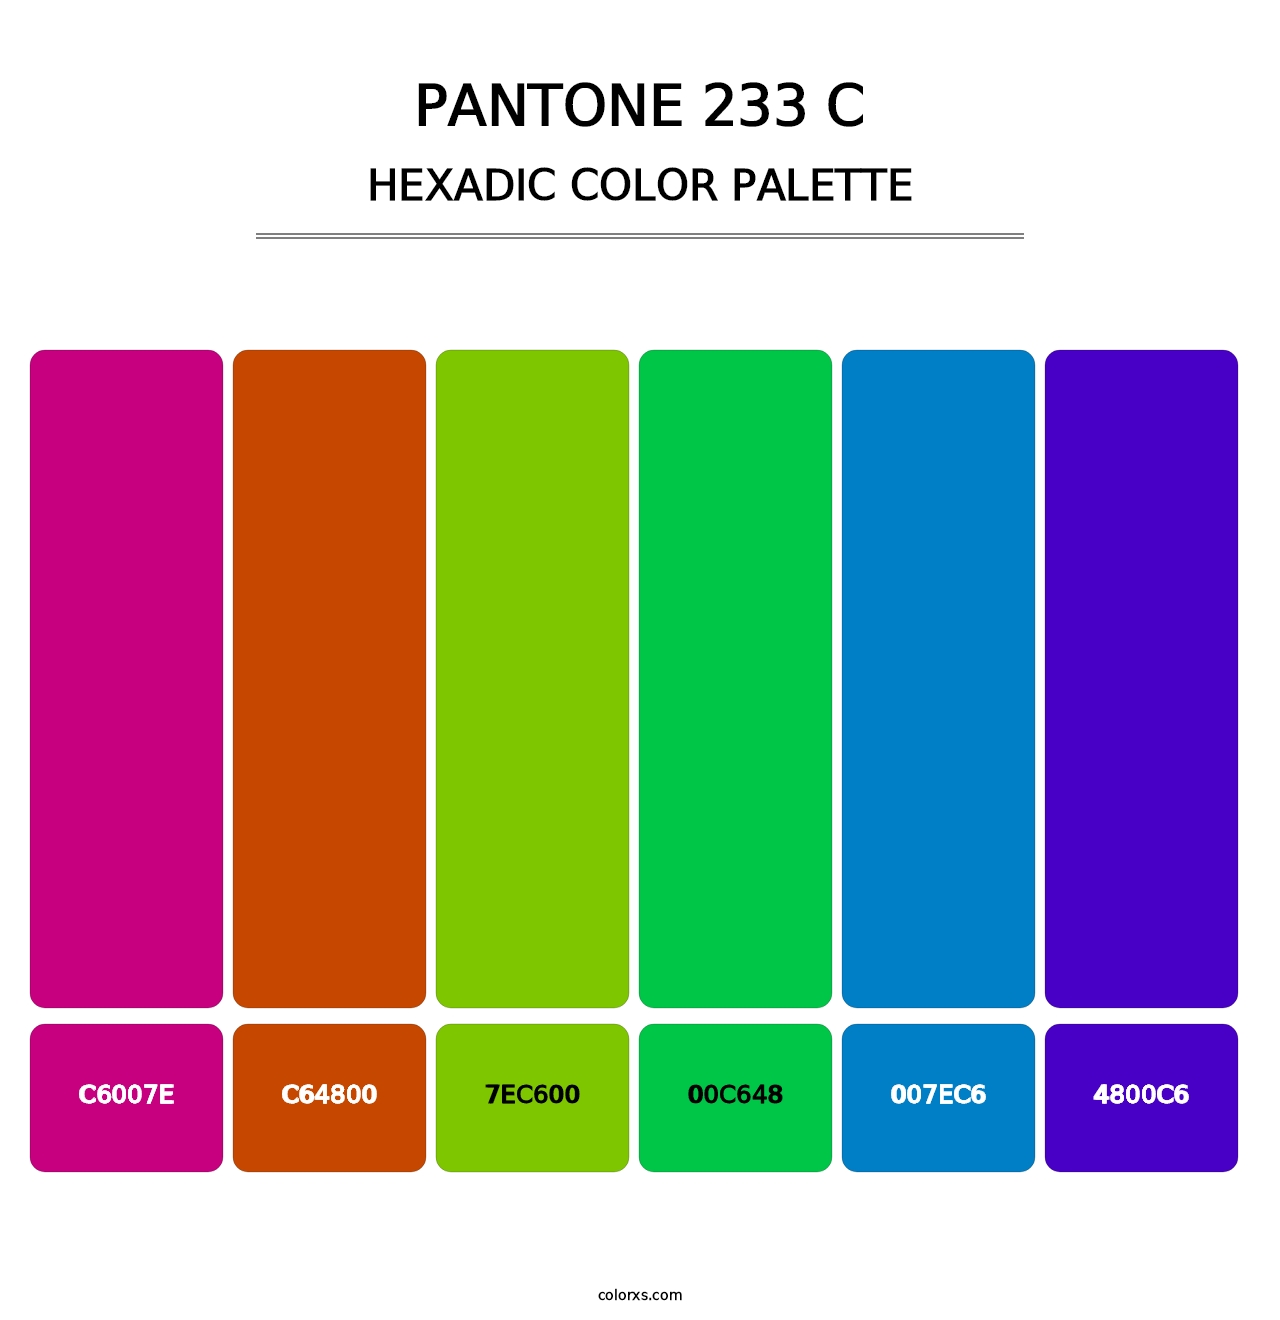 PANTONE 233 C - Hexadic Color Palette